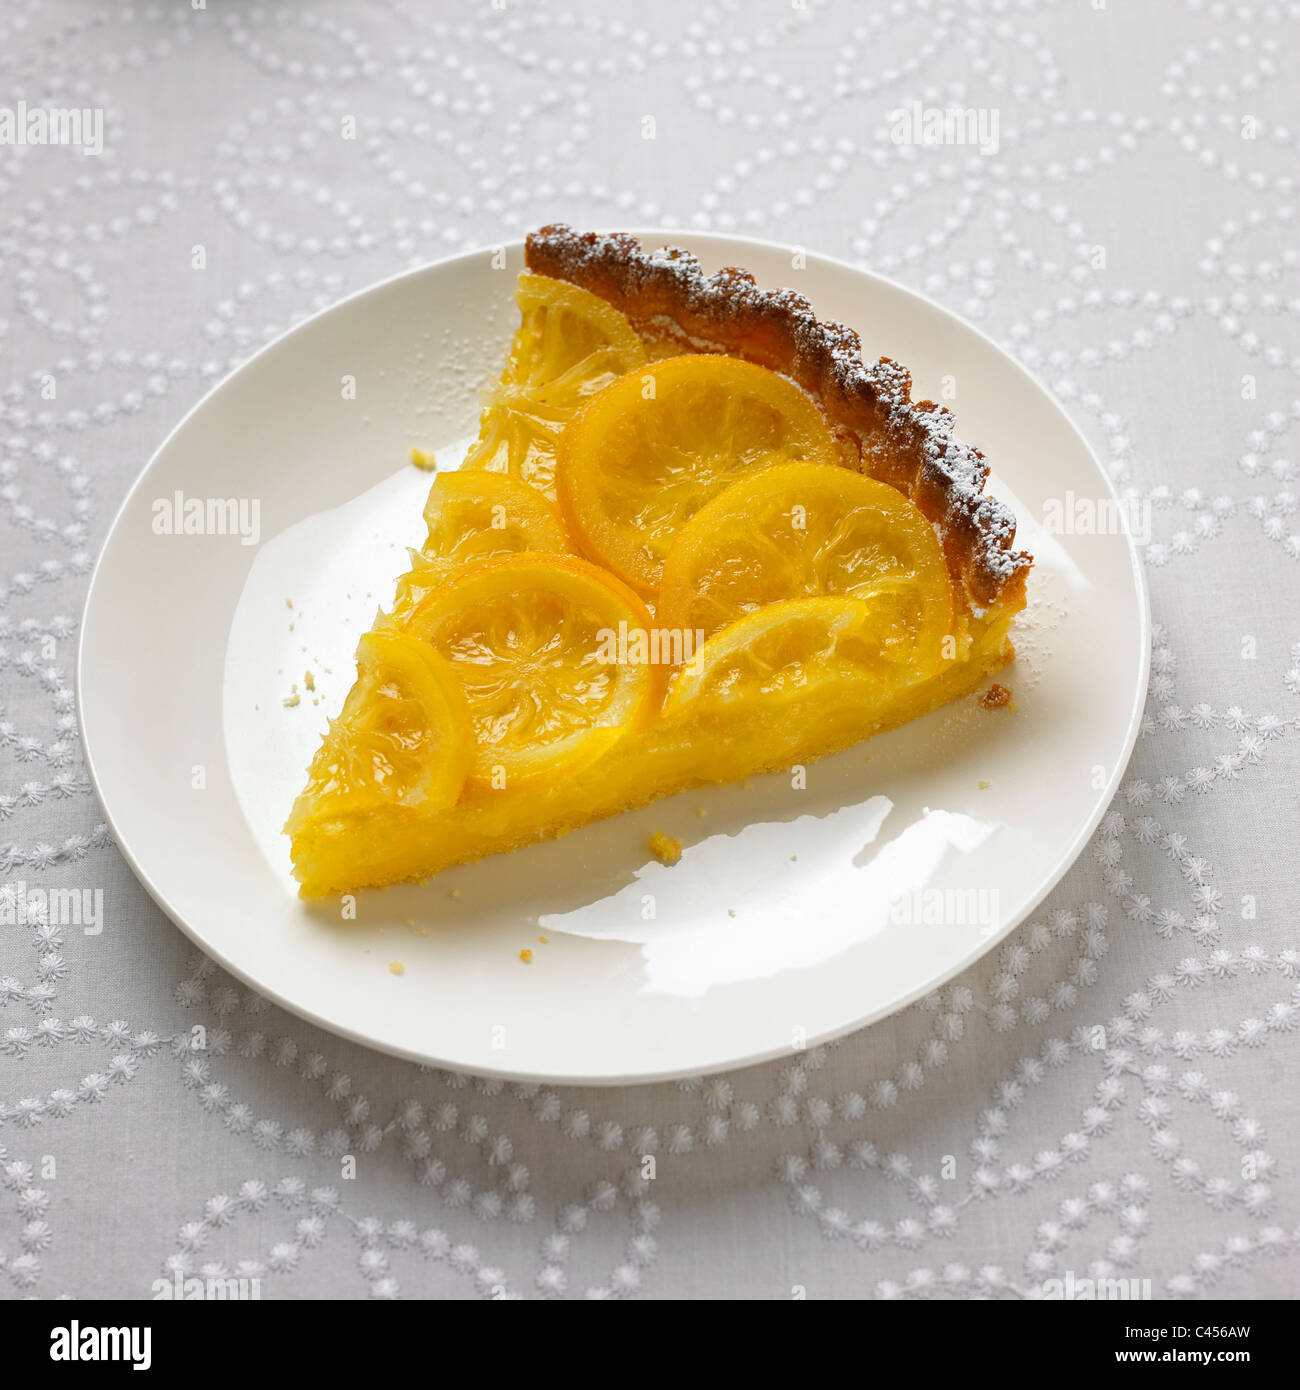 Slice of lemon tart on plate, close-up Stock Photo